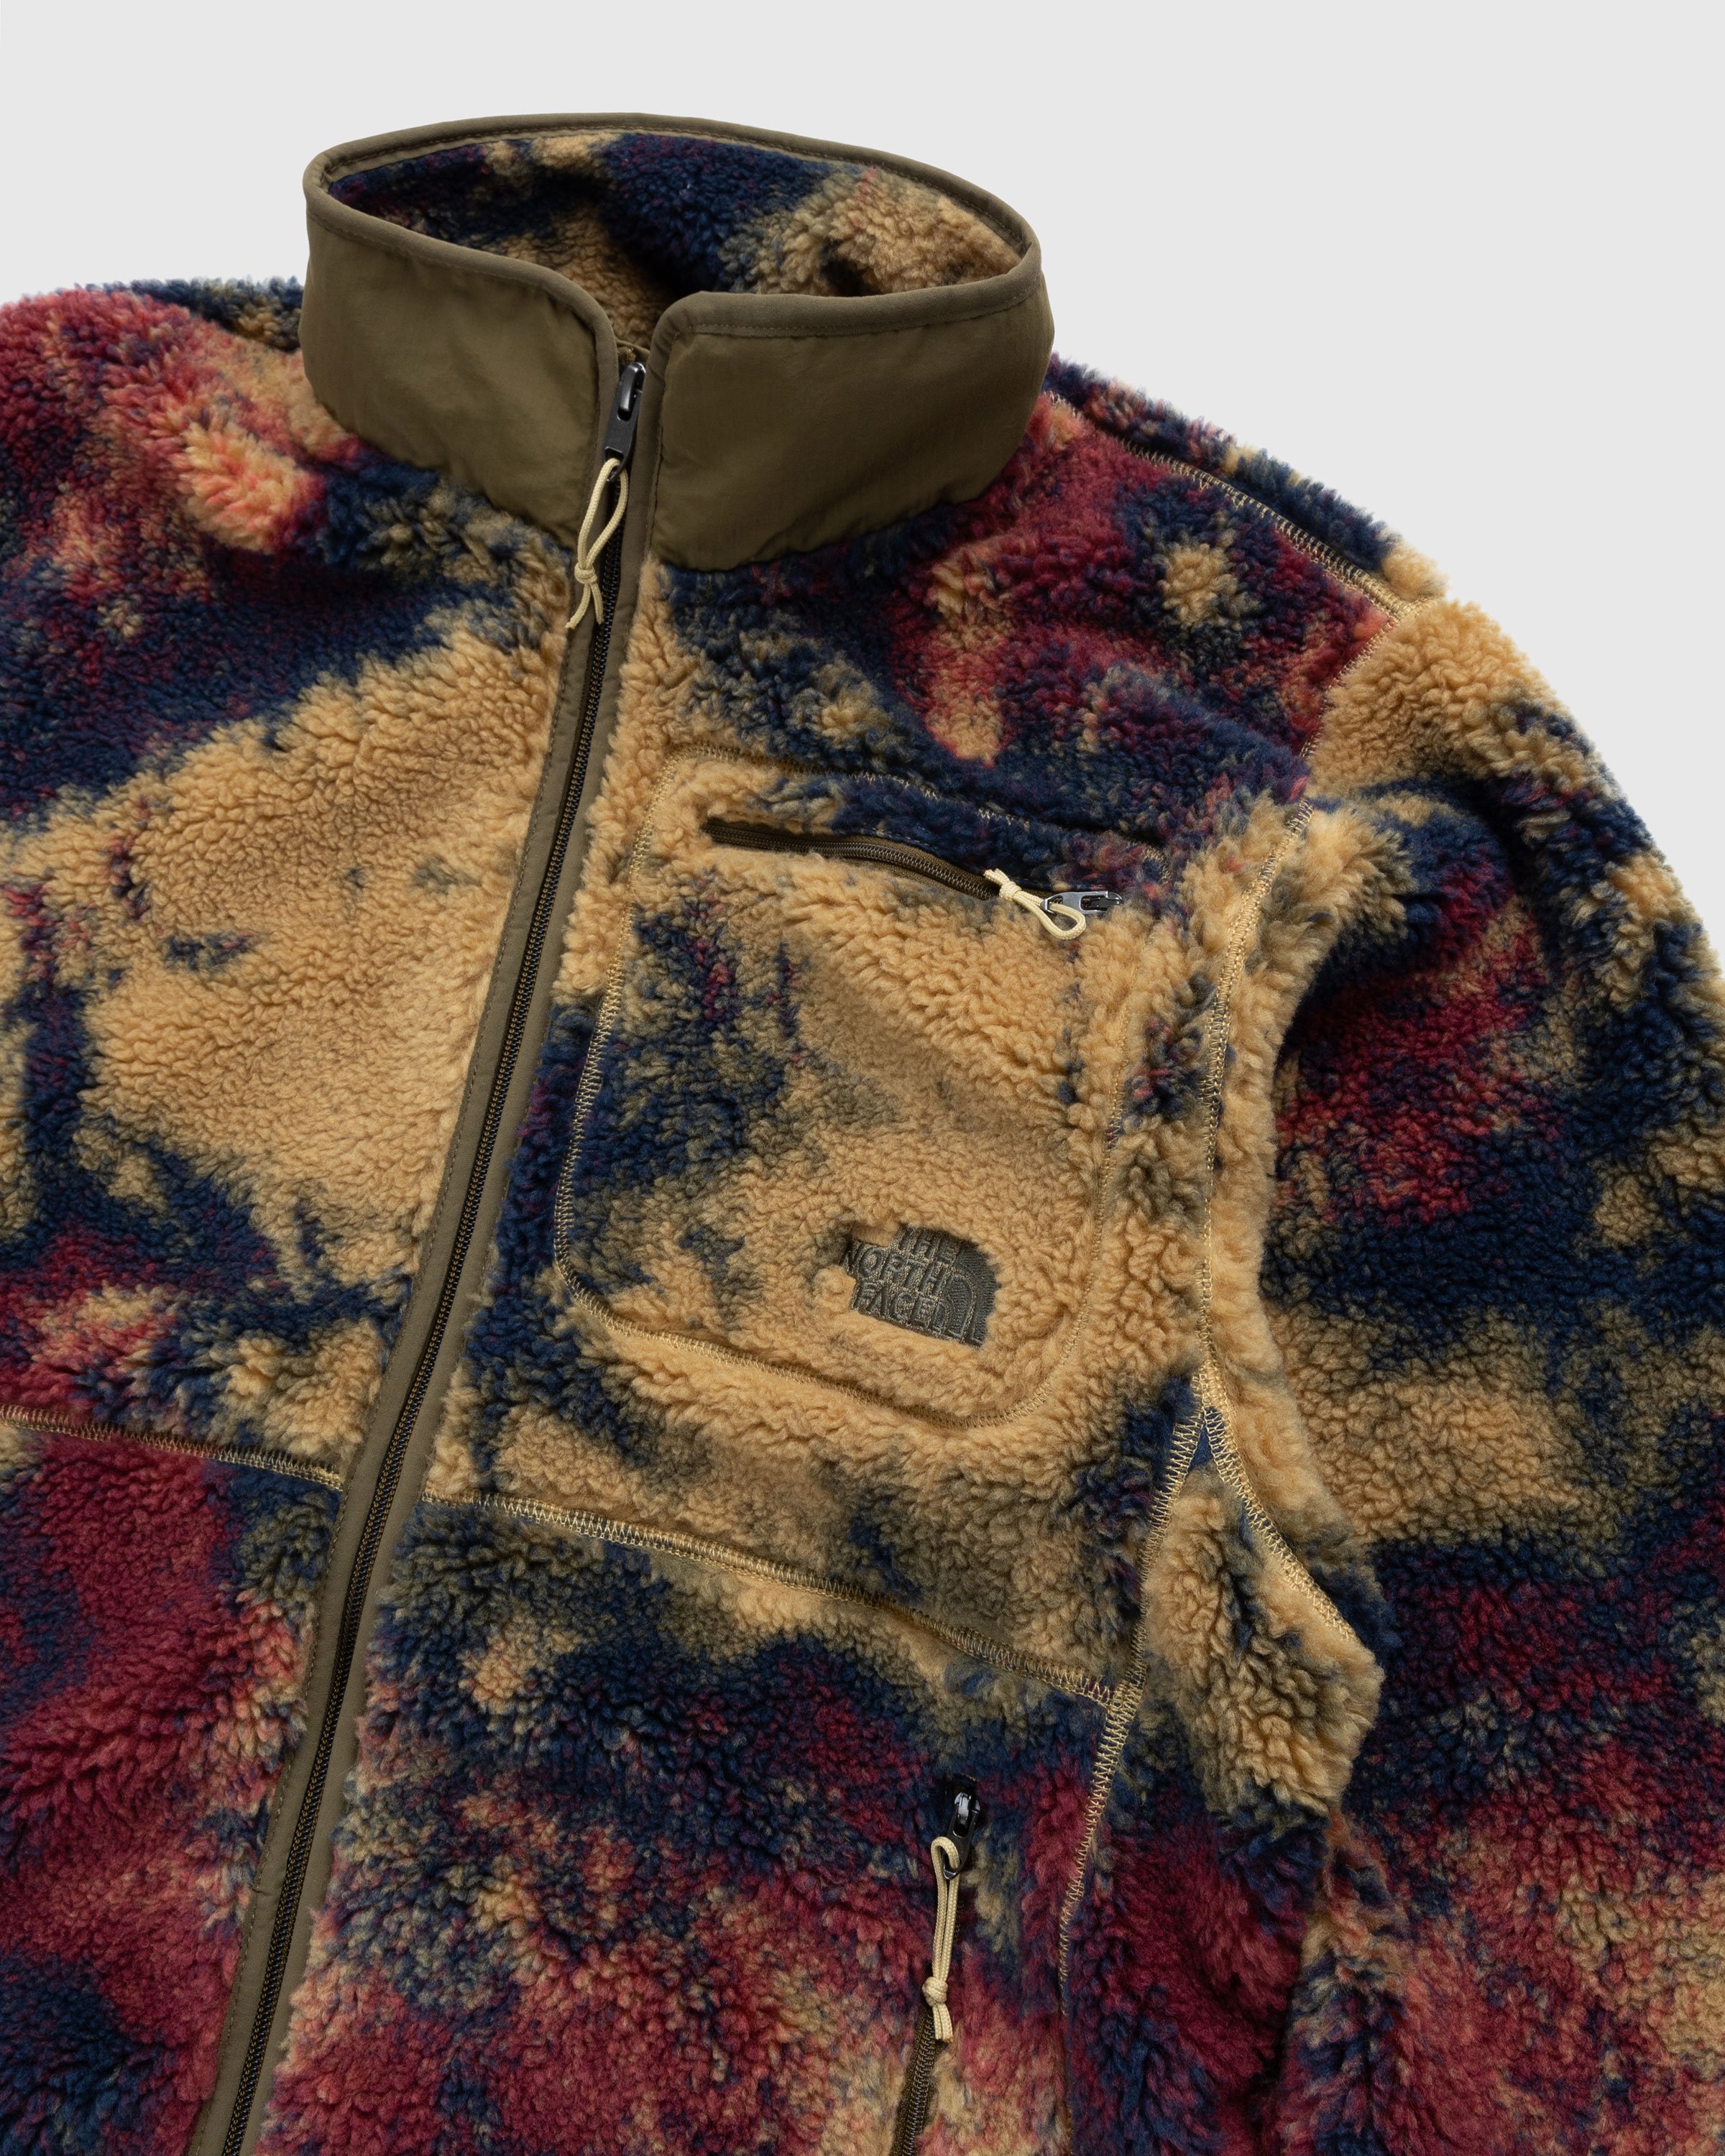 The North Face - Jacquard Extreme Pile Full-Zip Jacket Antelope Tan/Ice Dye Print - Clothing - Multi - Image 3